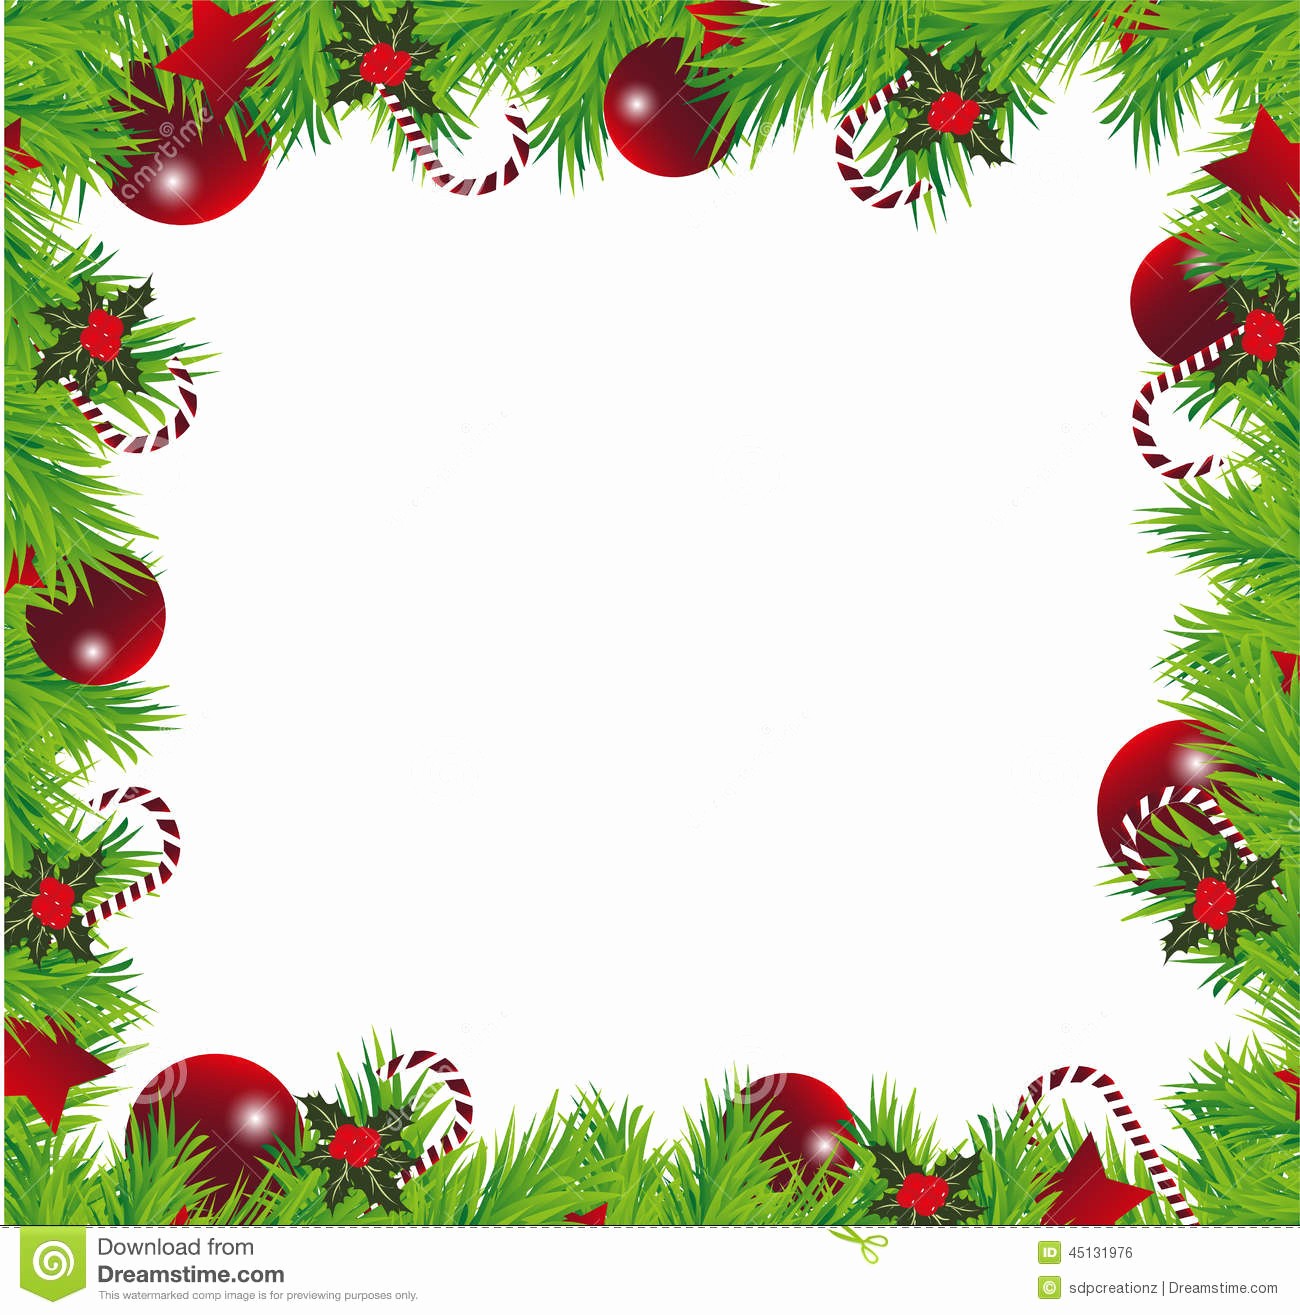 Christmas Background Images for Word Luxury Christmas Frame Stock Illustration Image